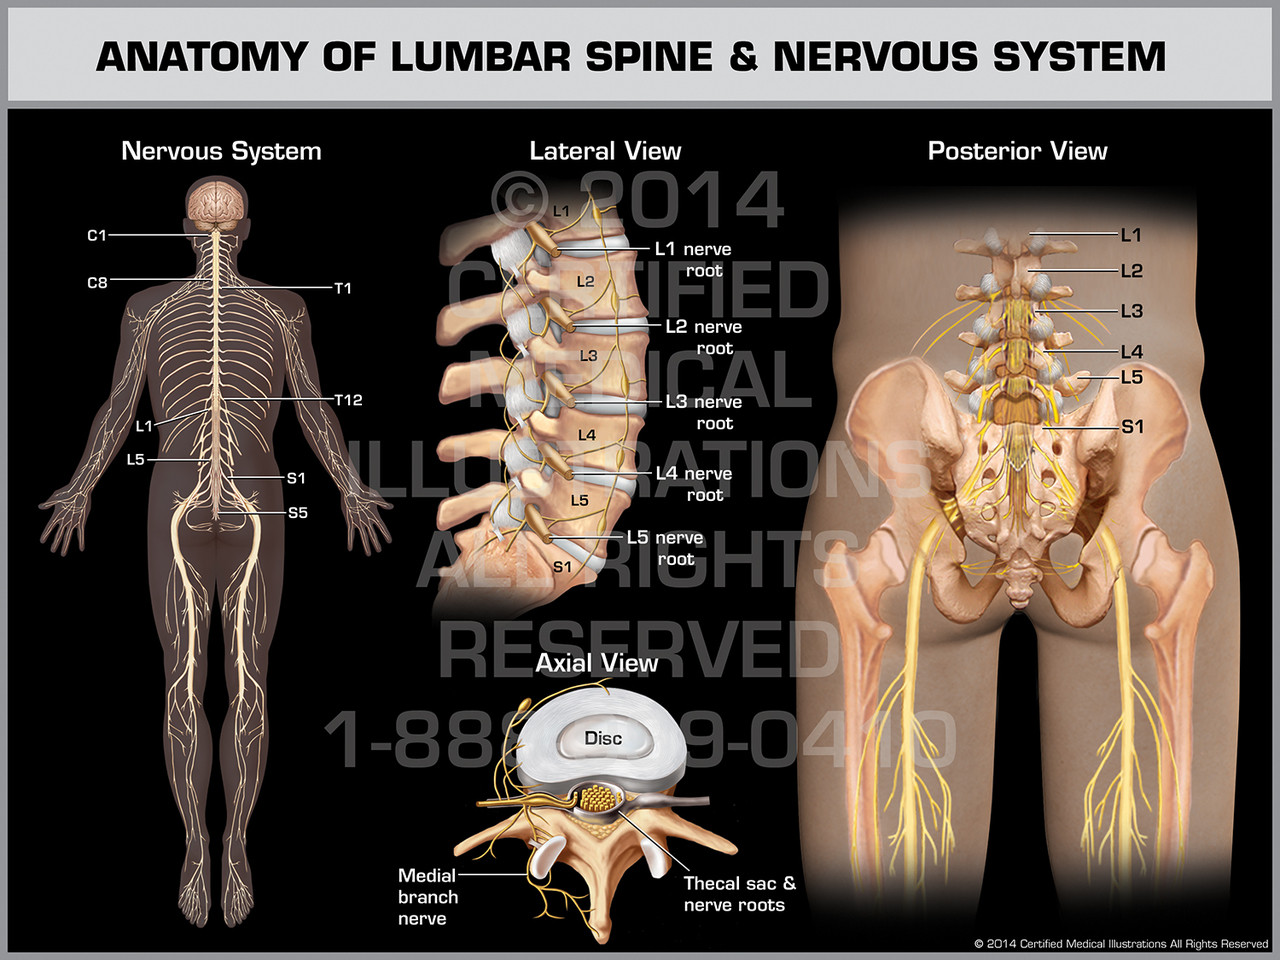 Anatomy of Lumbar Spine & Nervous System